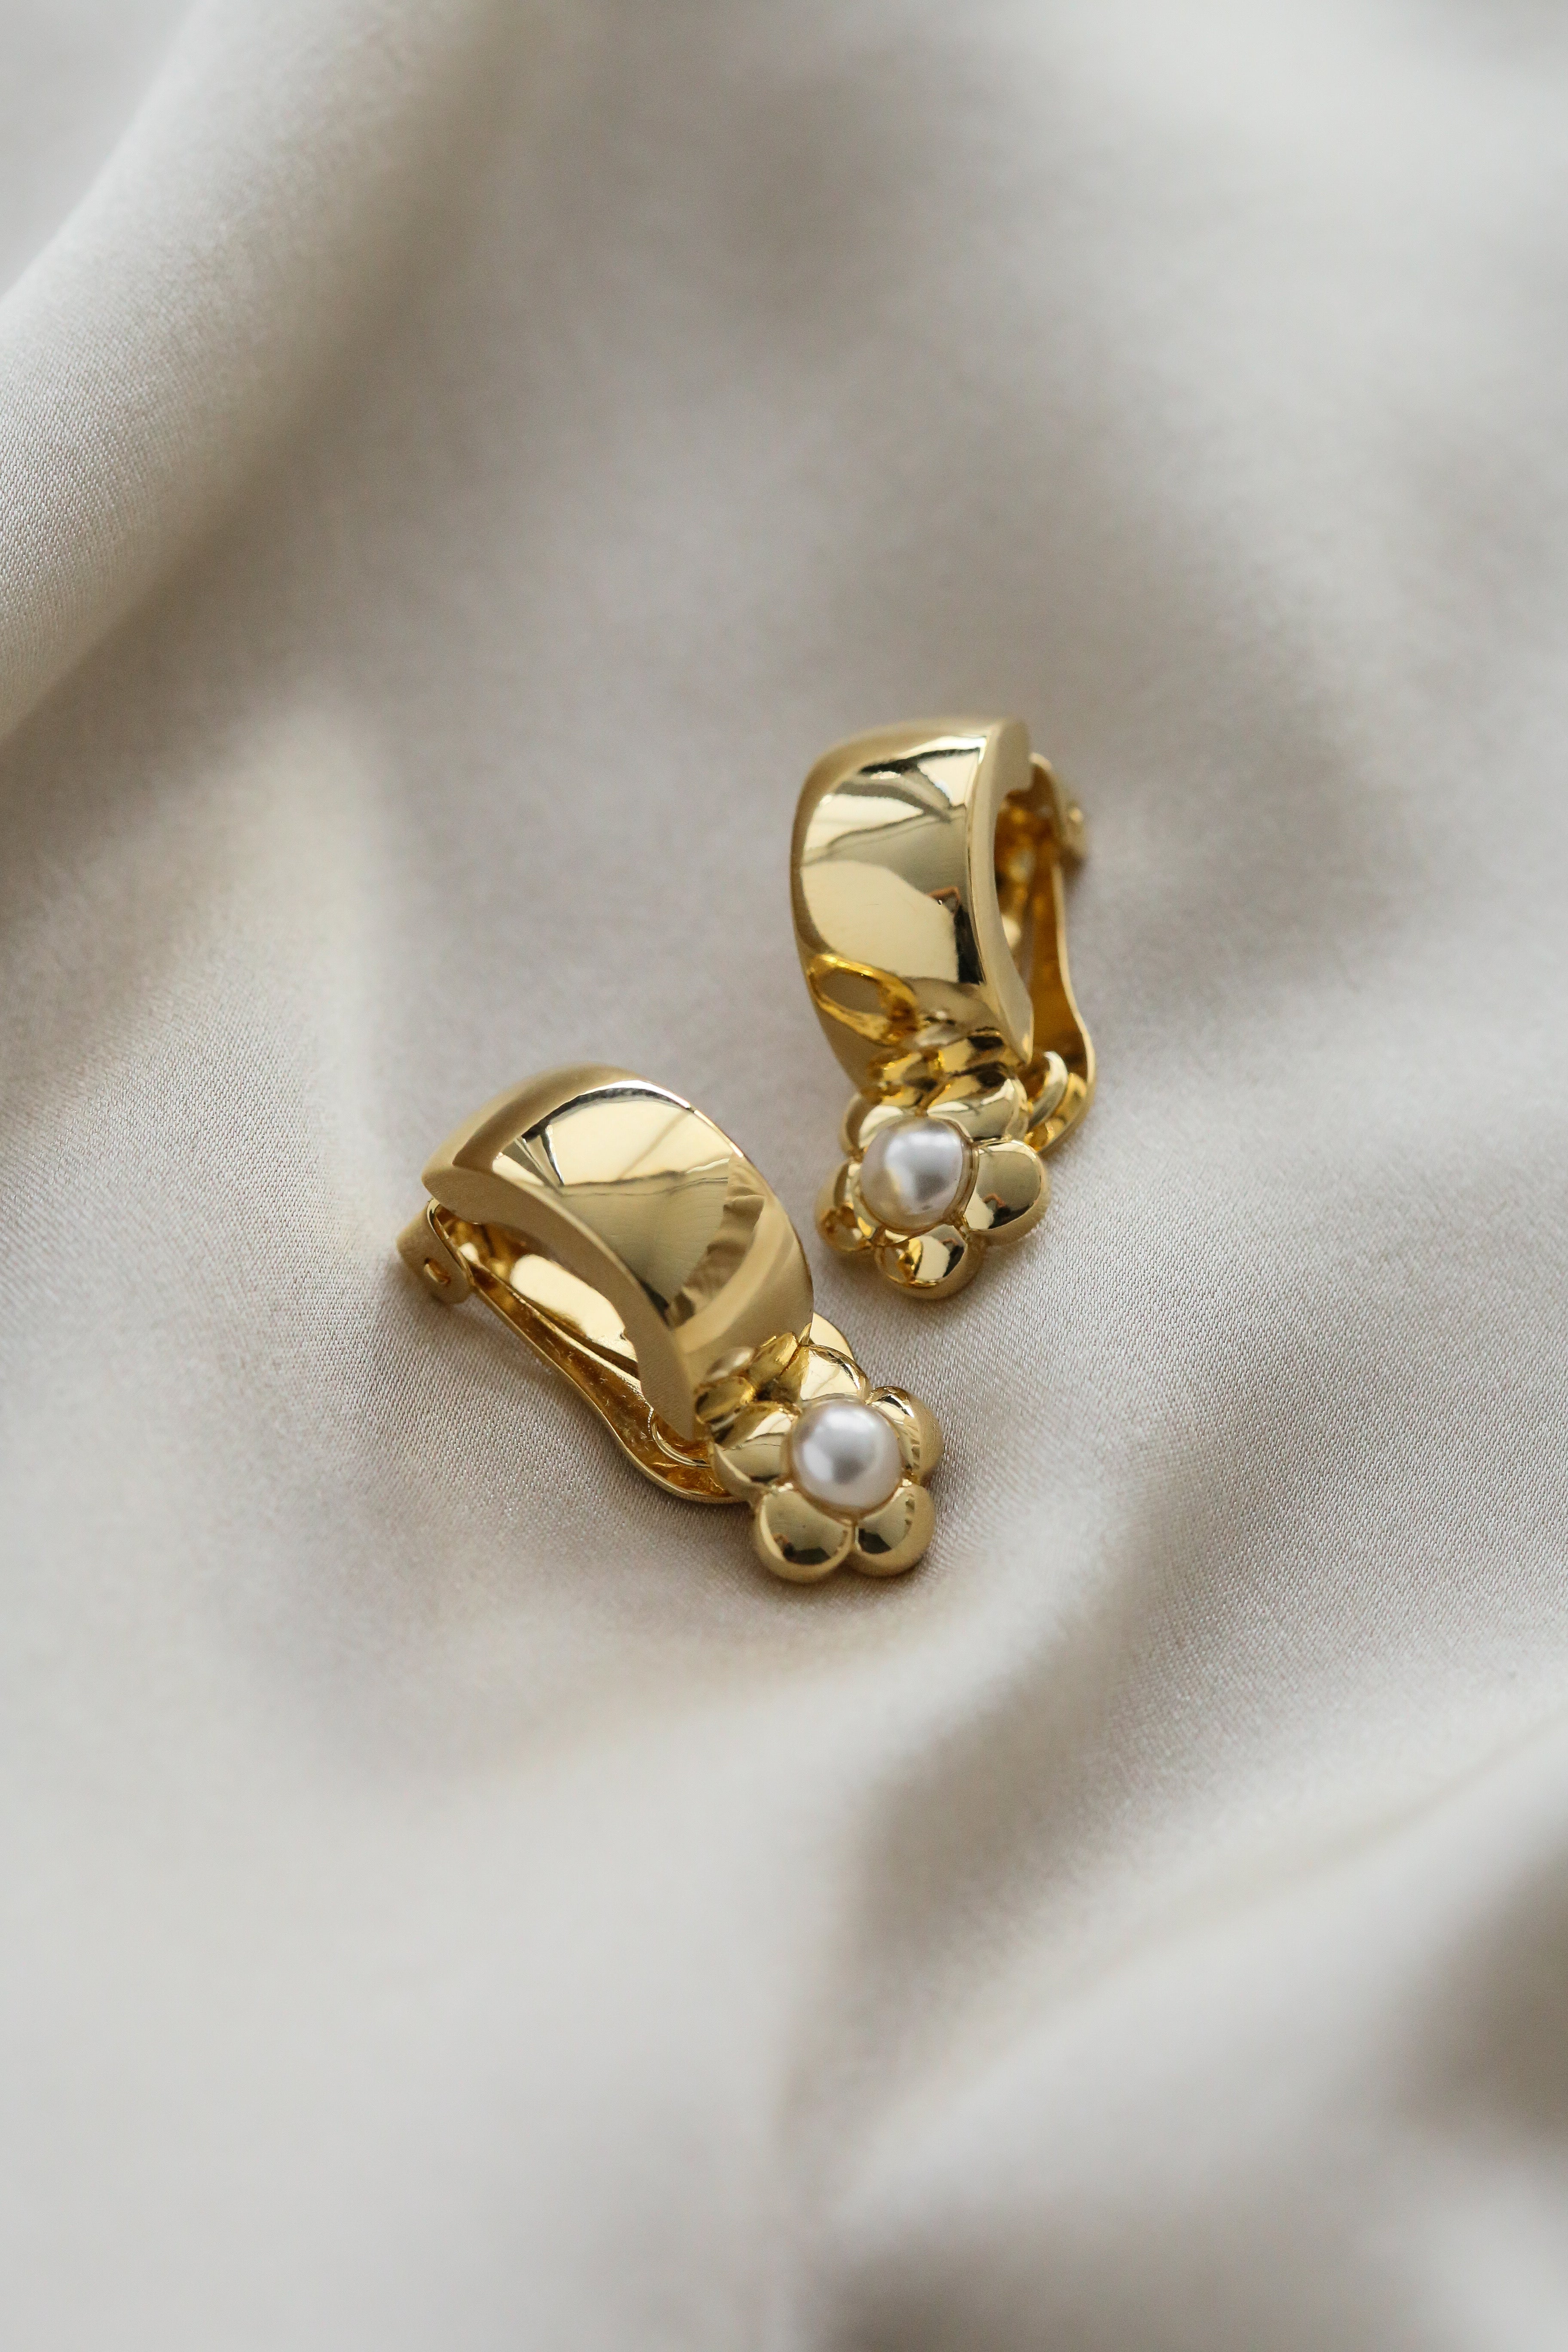 Venice (Vintage) Earrings - Boutique Minimaliste has waterproof, durable, elegant and vintage inspired jewelry